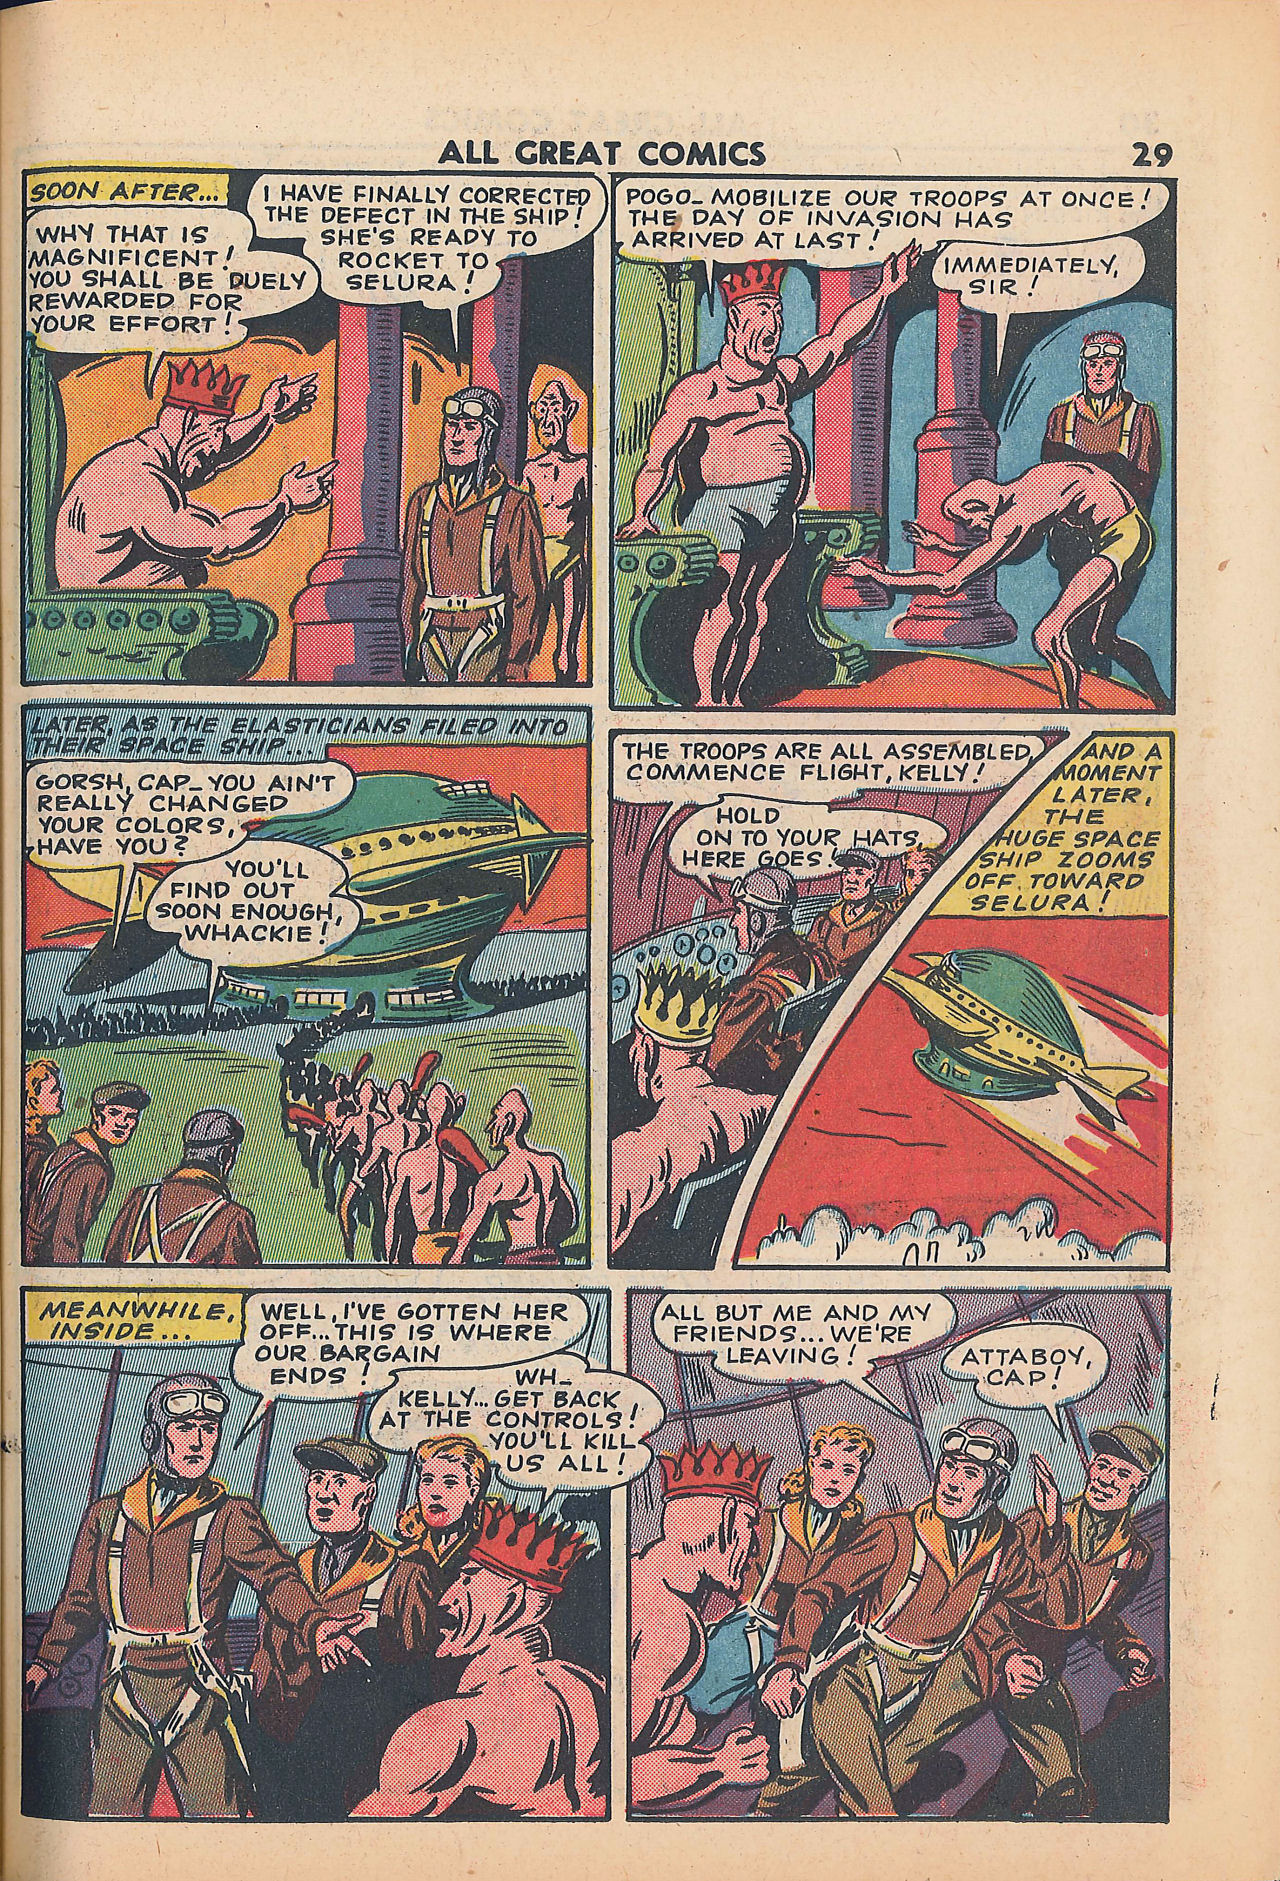 Read online All Great Comics (1945) comic -  Issue # TPB - 31